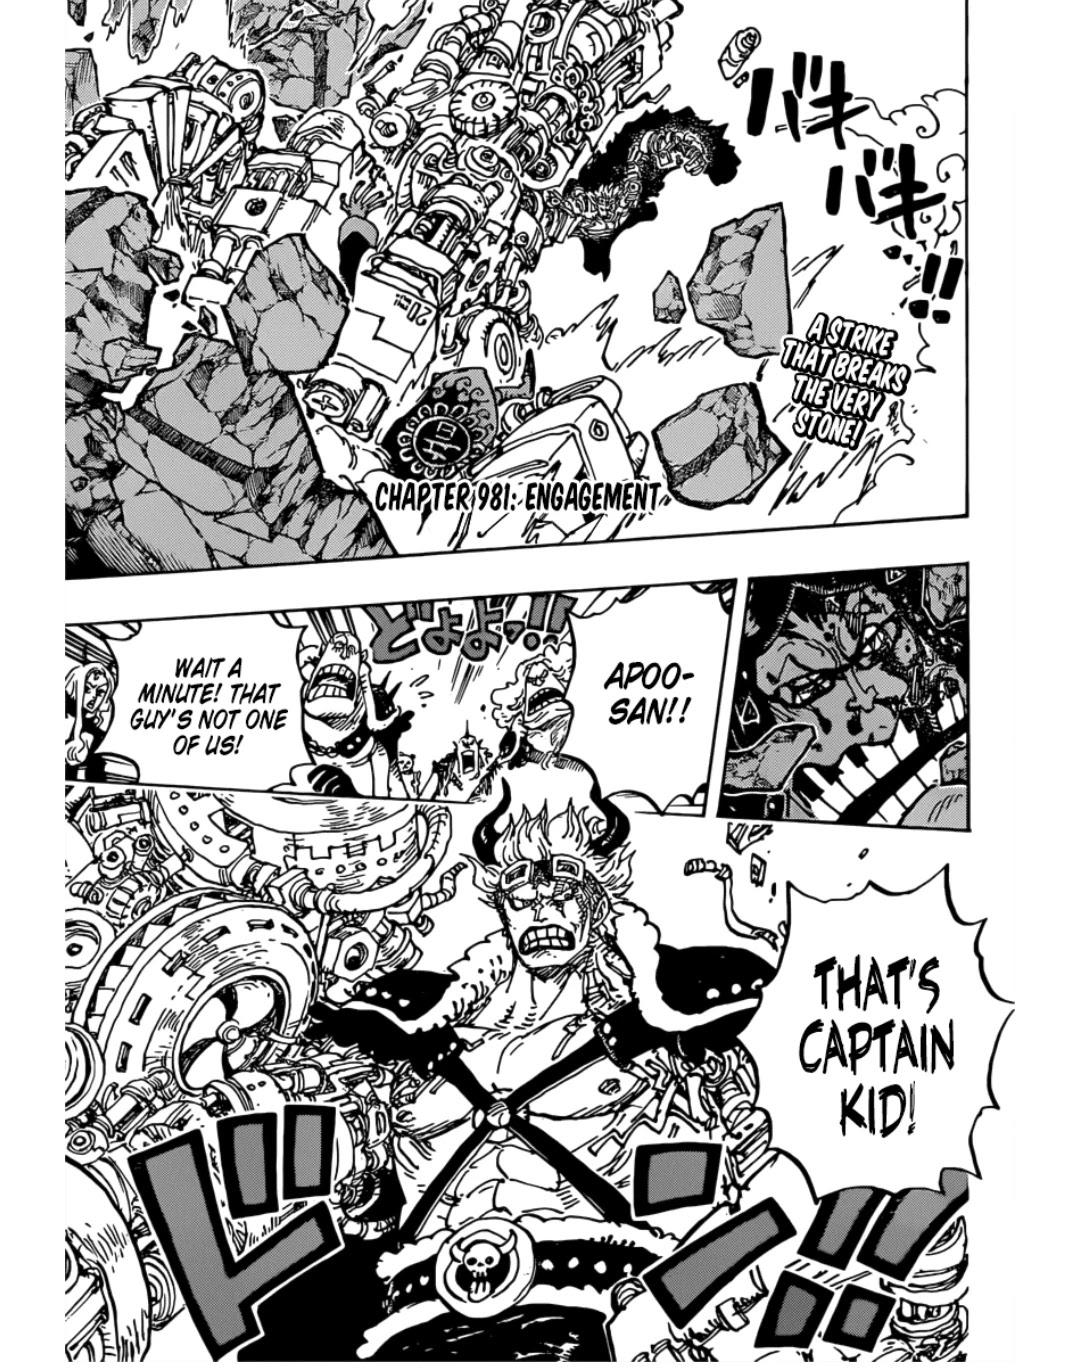 Read One Piece Chapter 454 : Humming on Mangakakalot